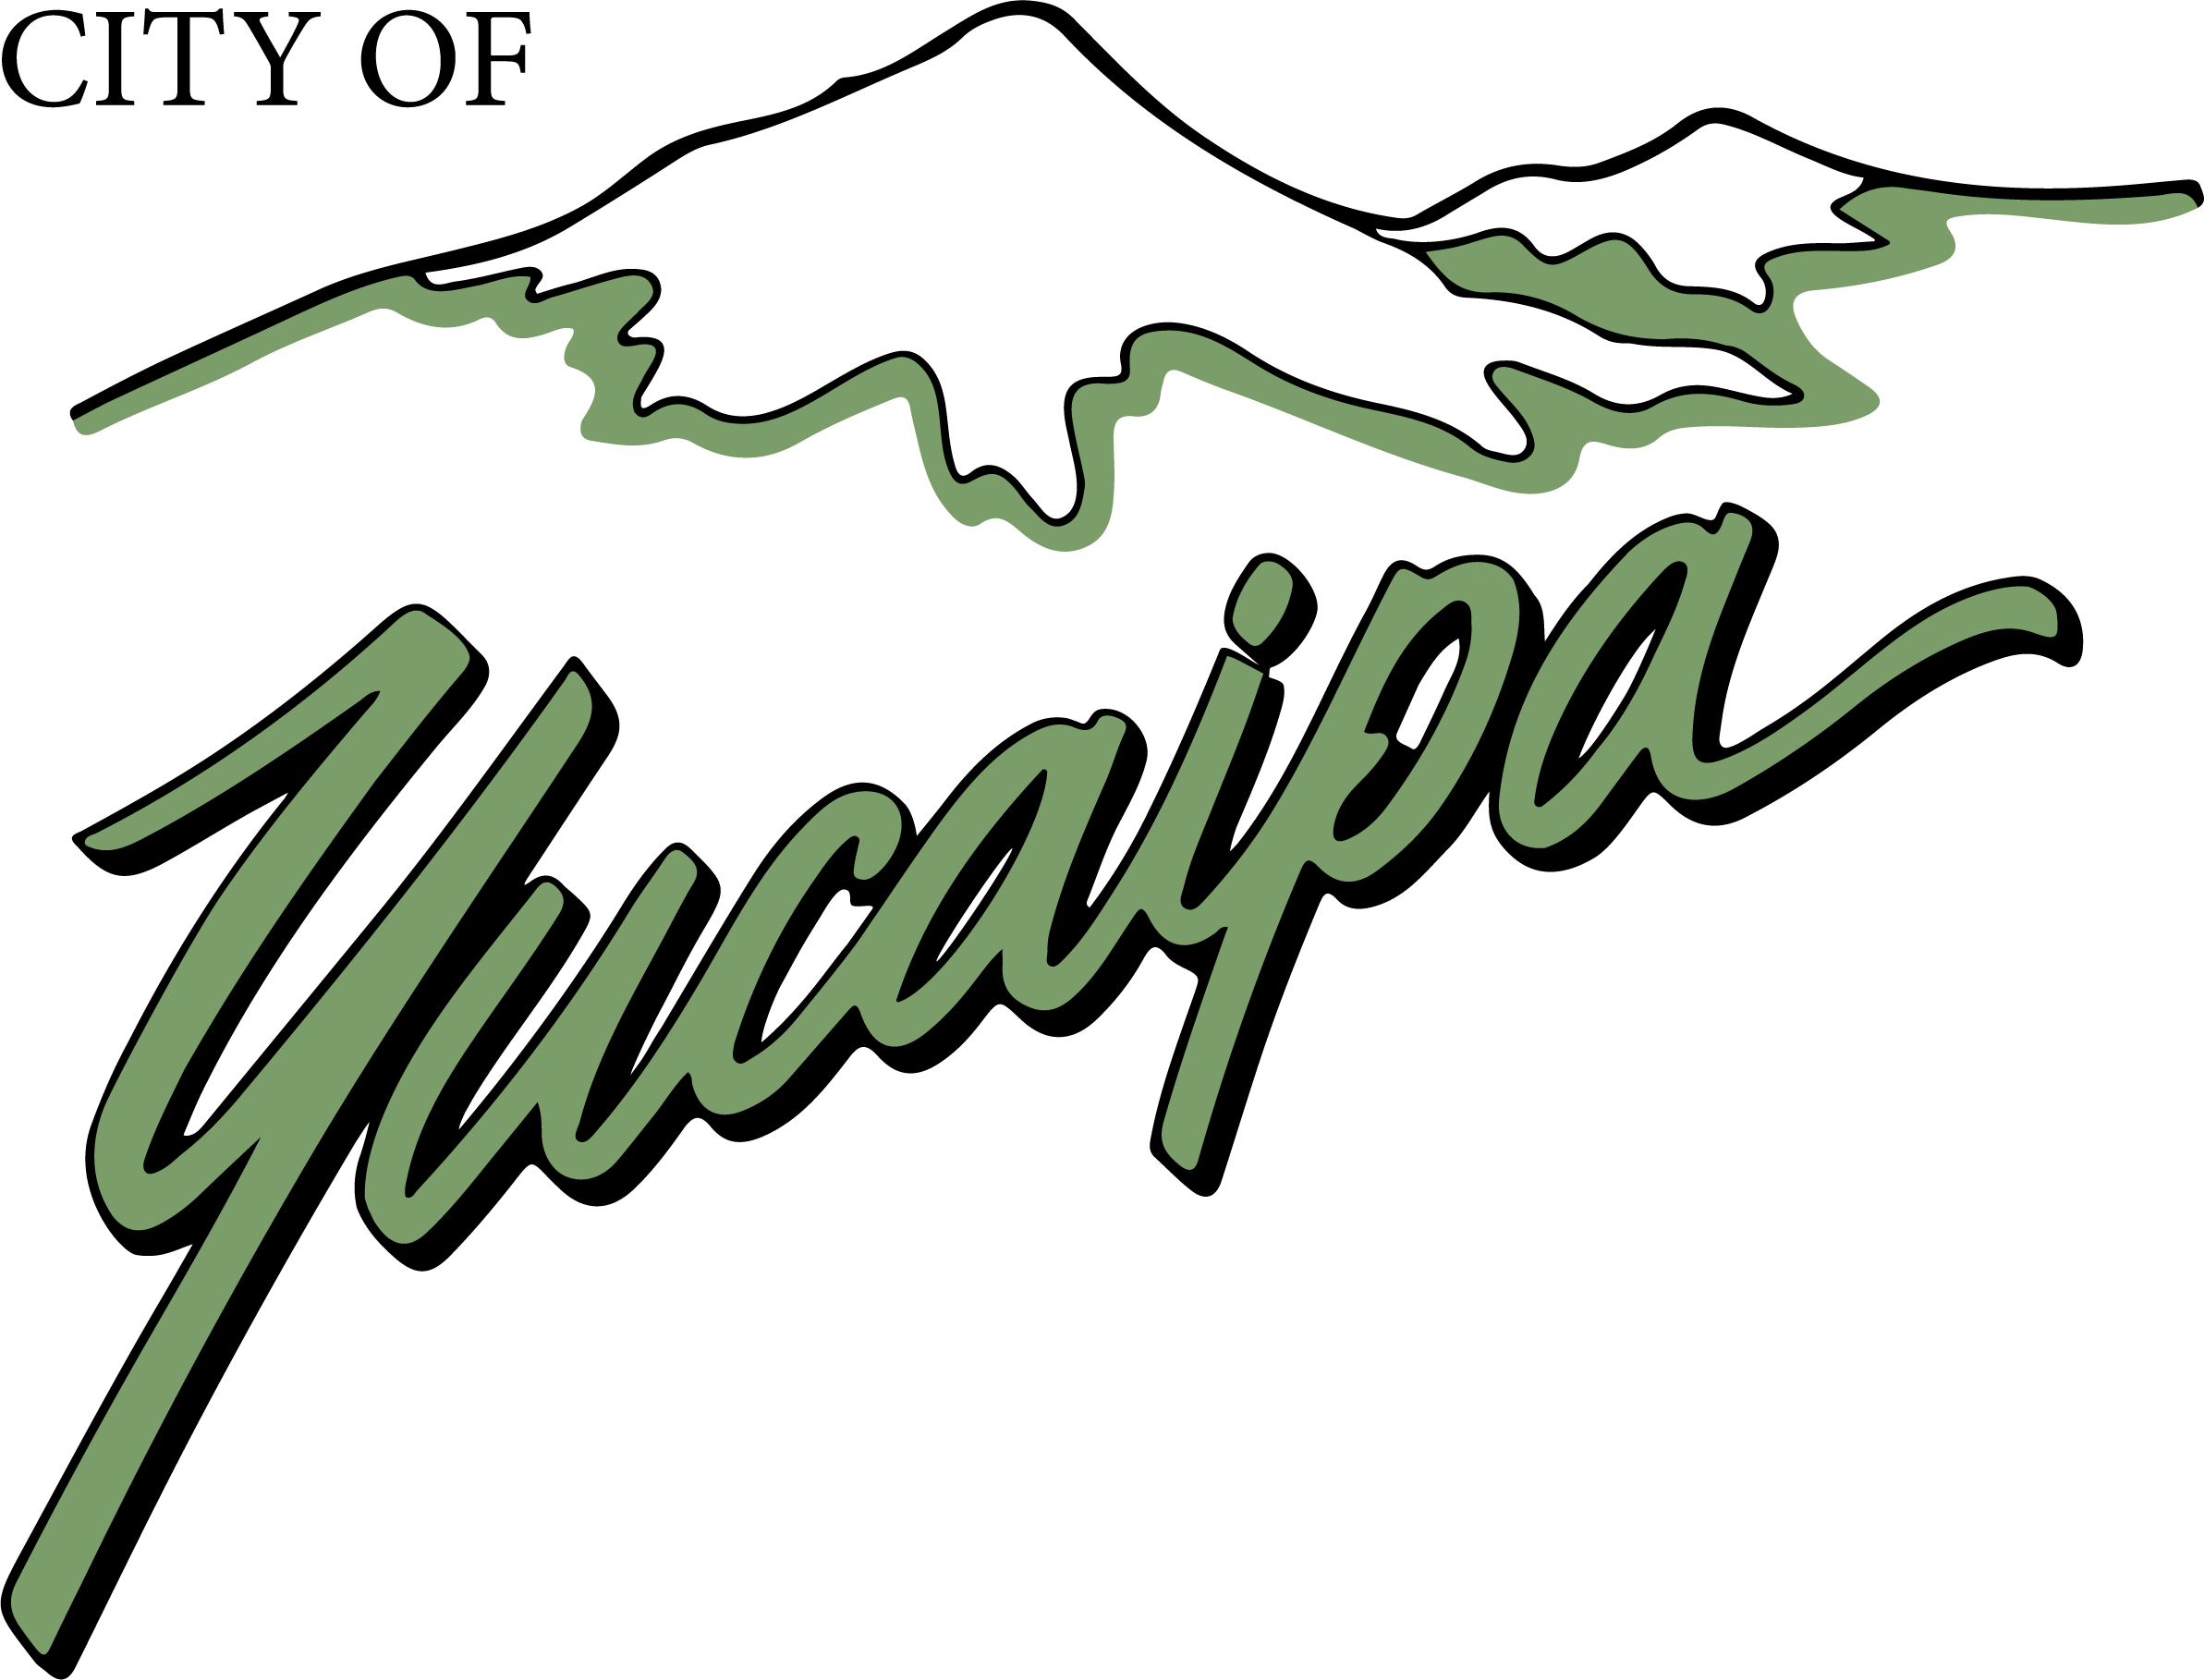 Organization logo of City of Yucaipa